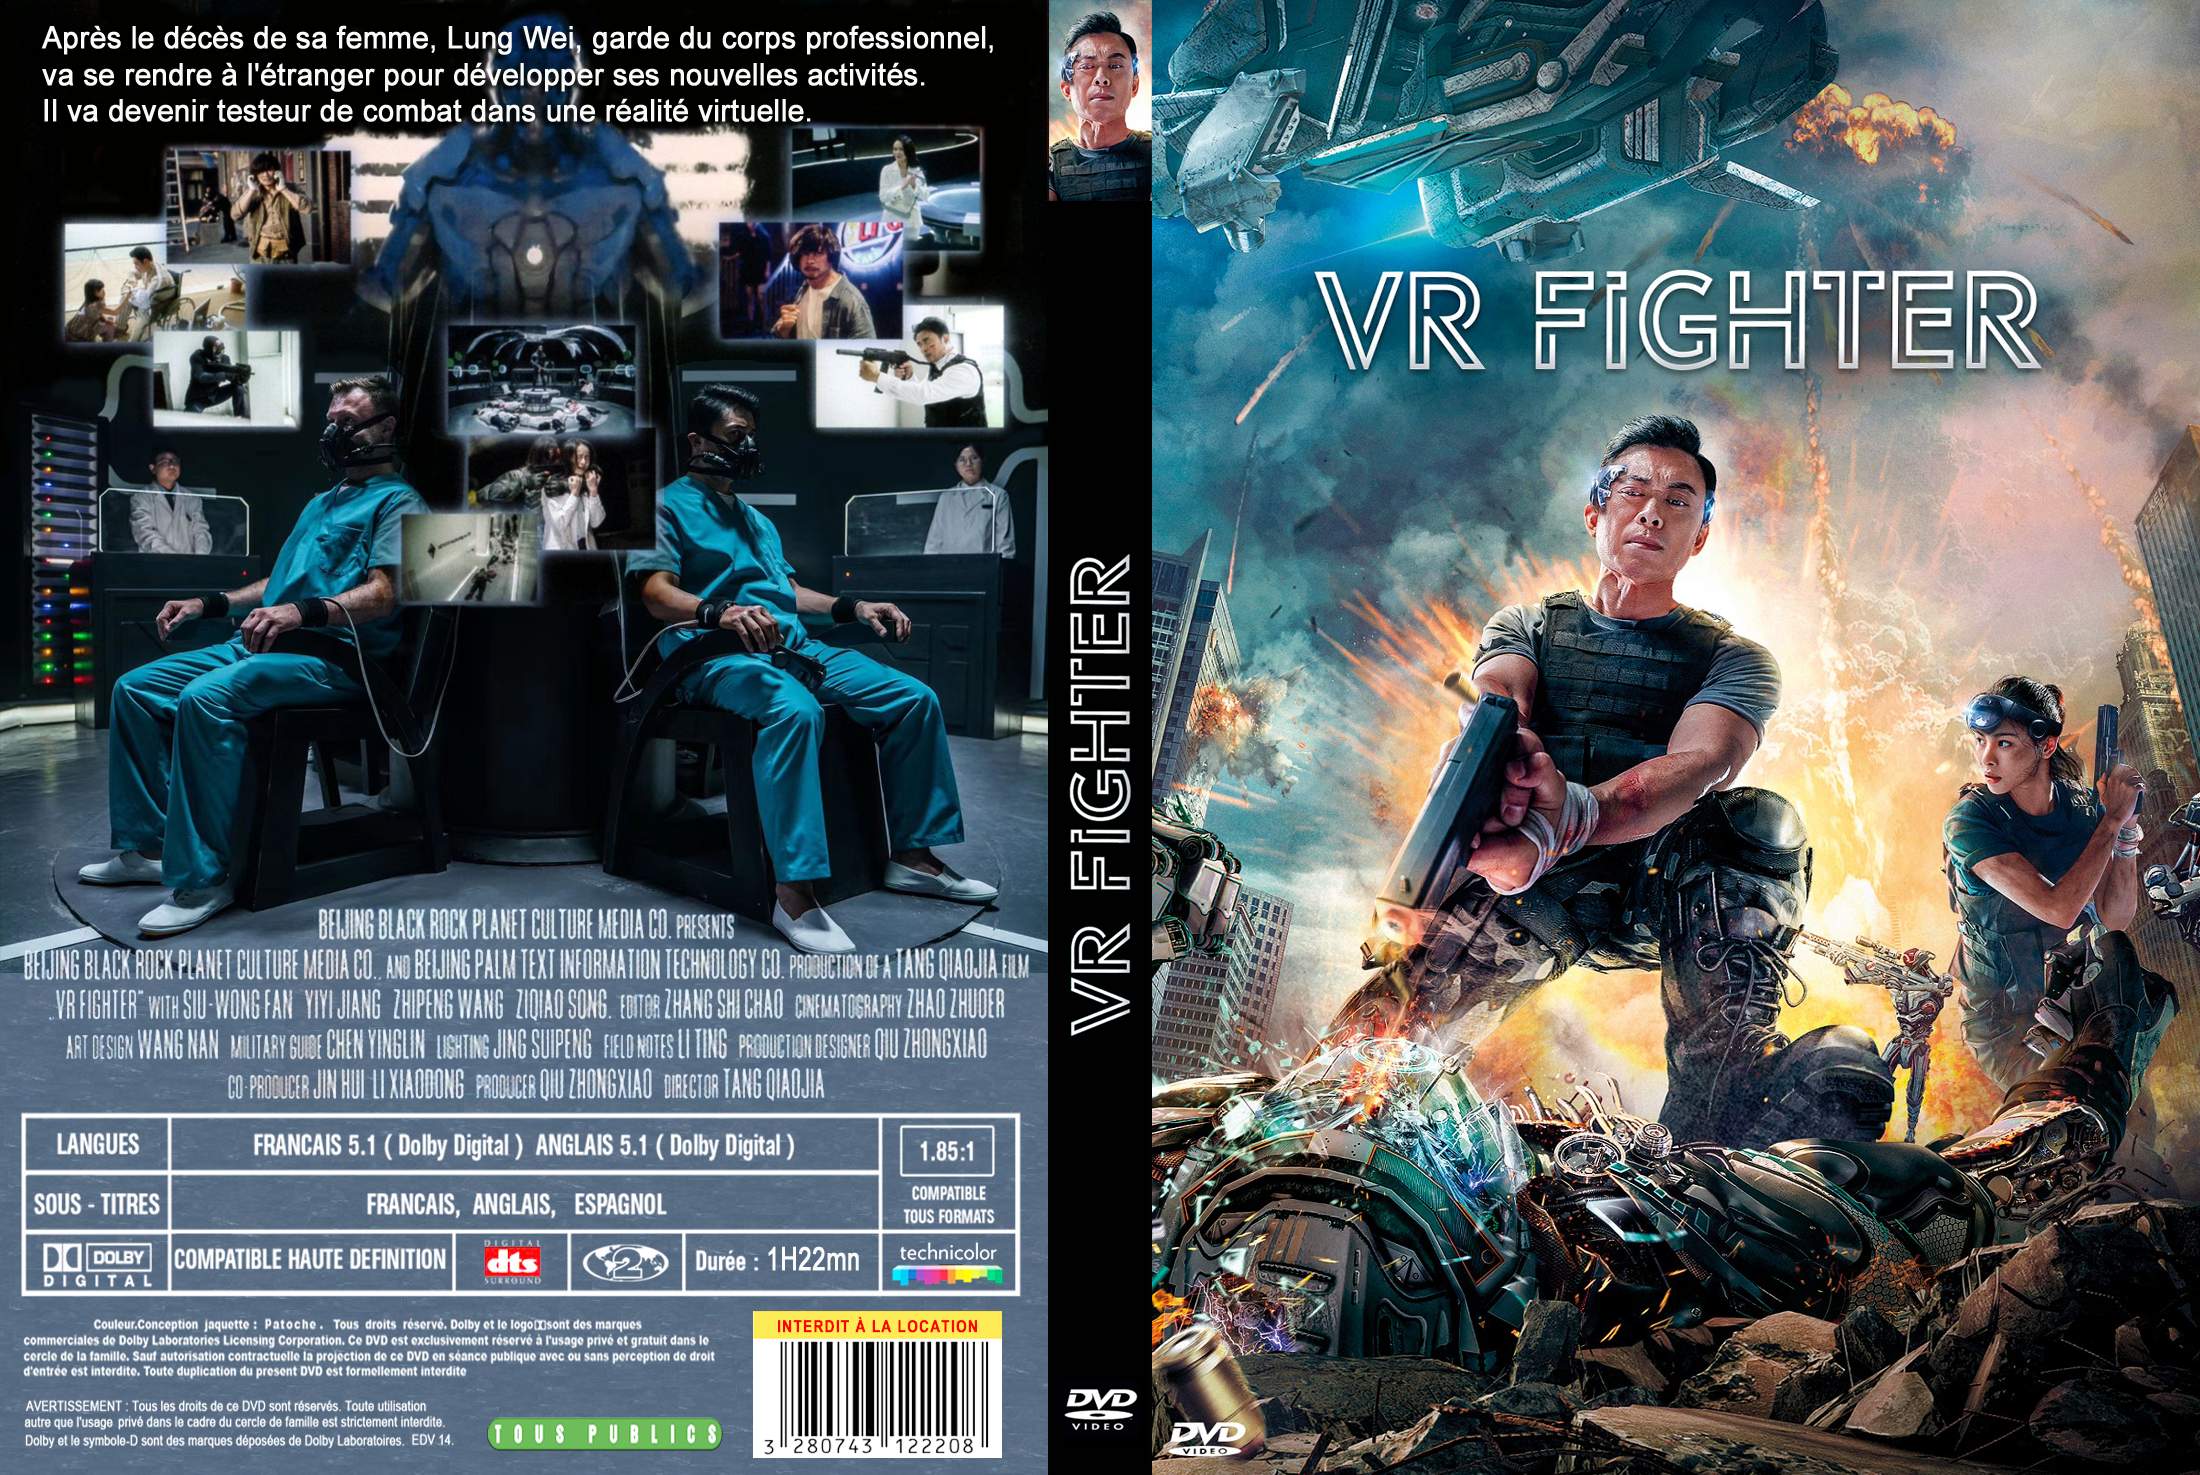 Jaquette DVD VR fighter custom